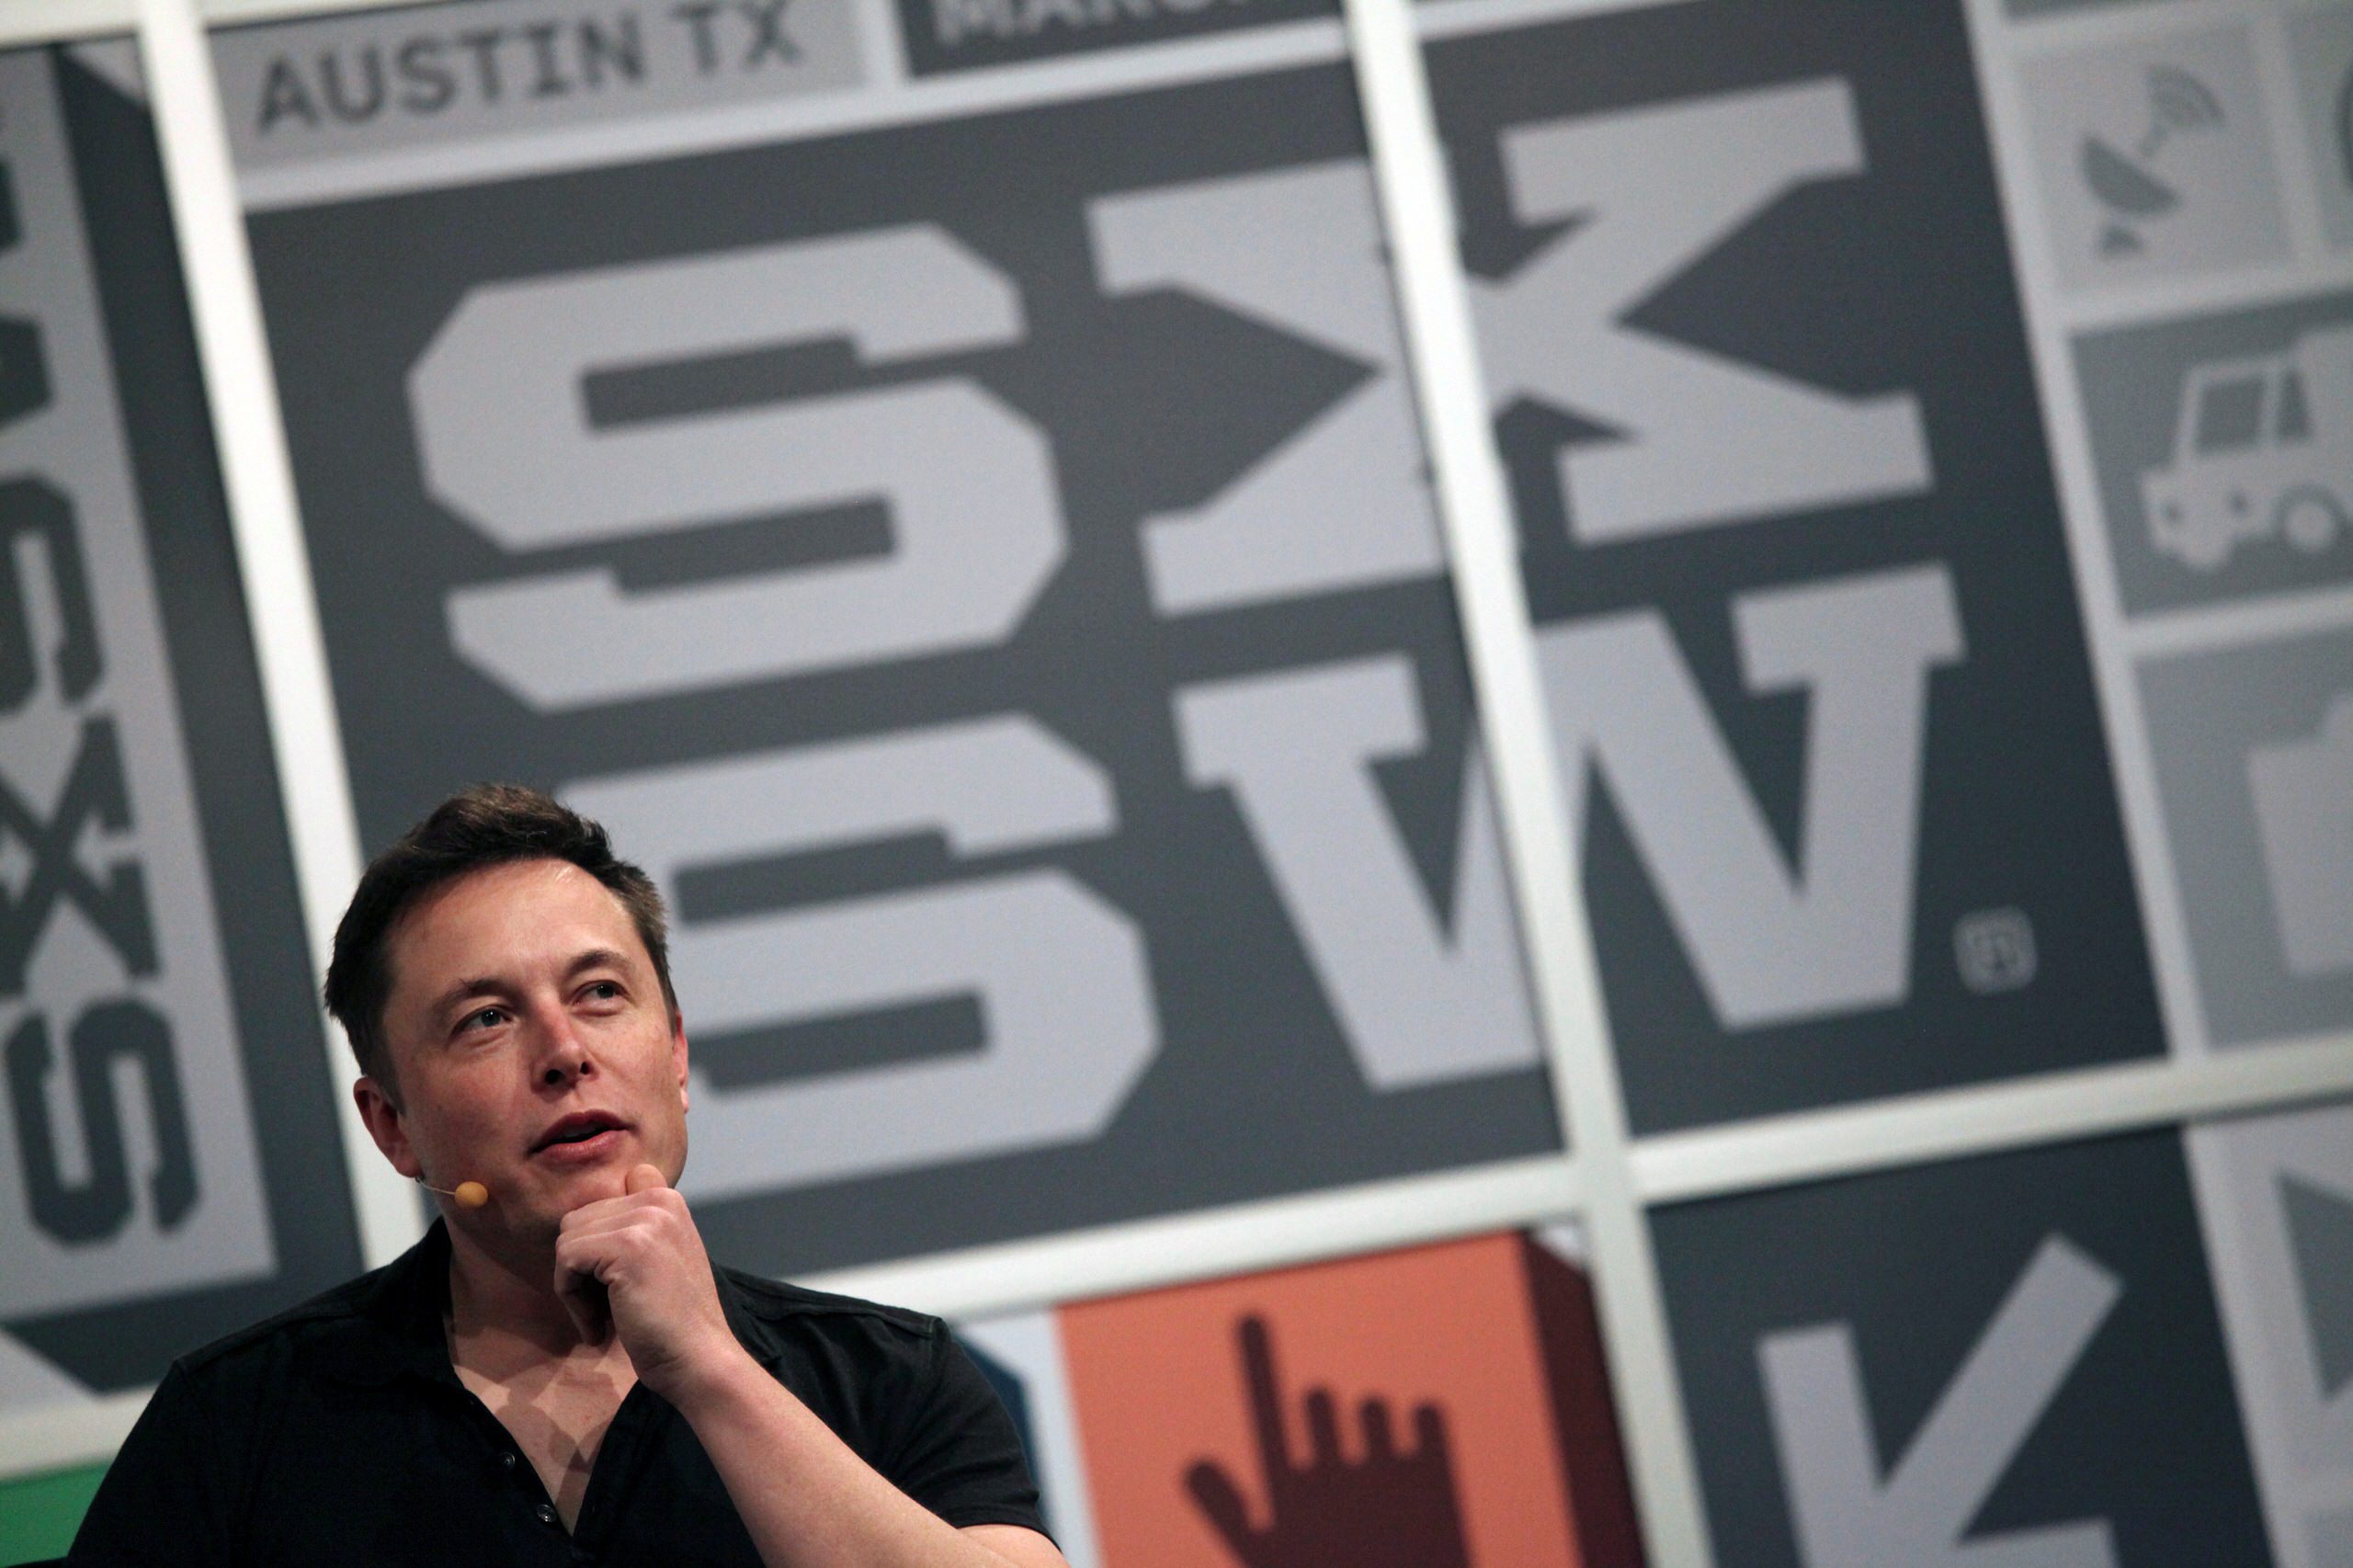 Elon Musk, the chief executive of Tesla Motor at sxsw